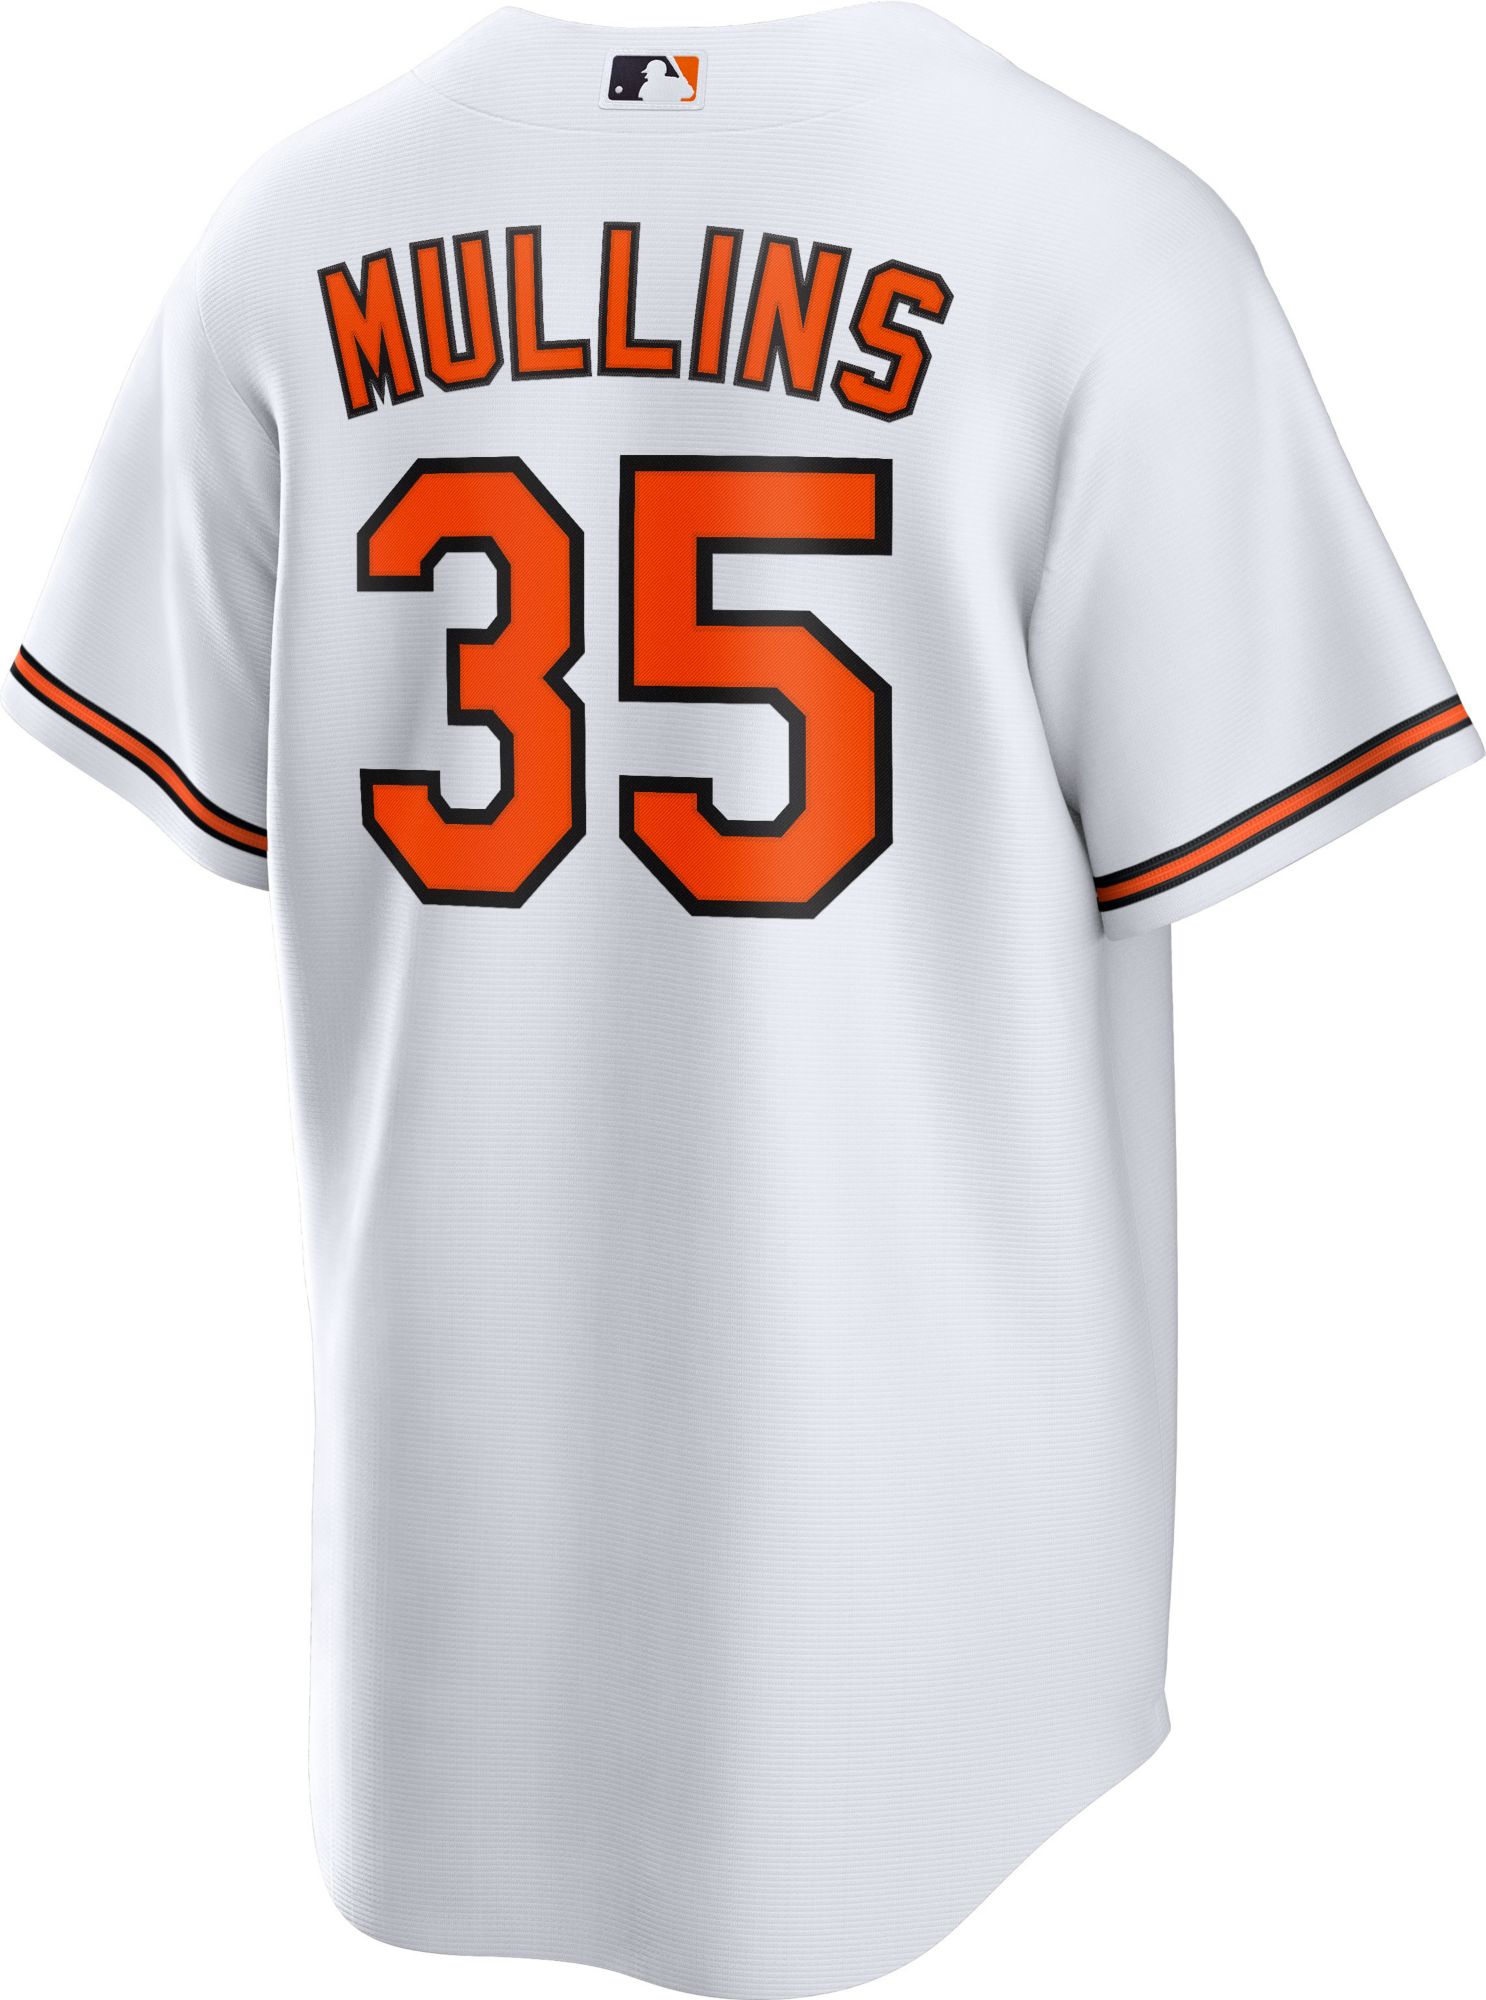 Baltimore Orioles jersey deals